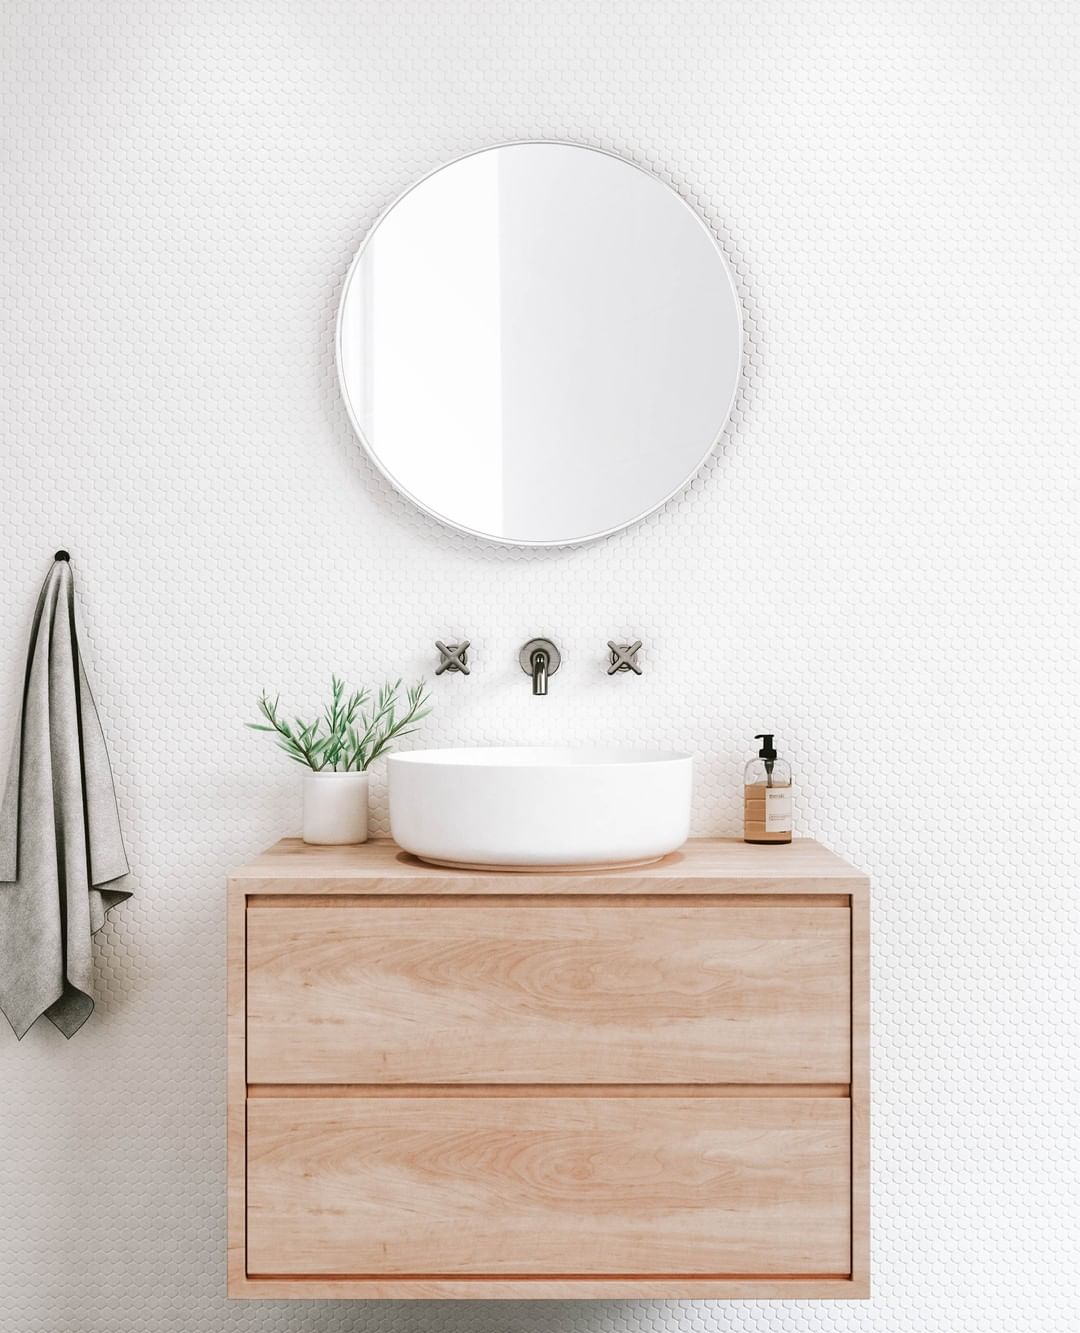 Modern white basin bathroom sink. Photo by Instagram user @abiinteriors